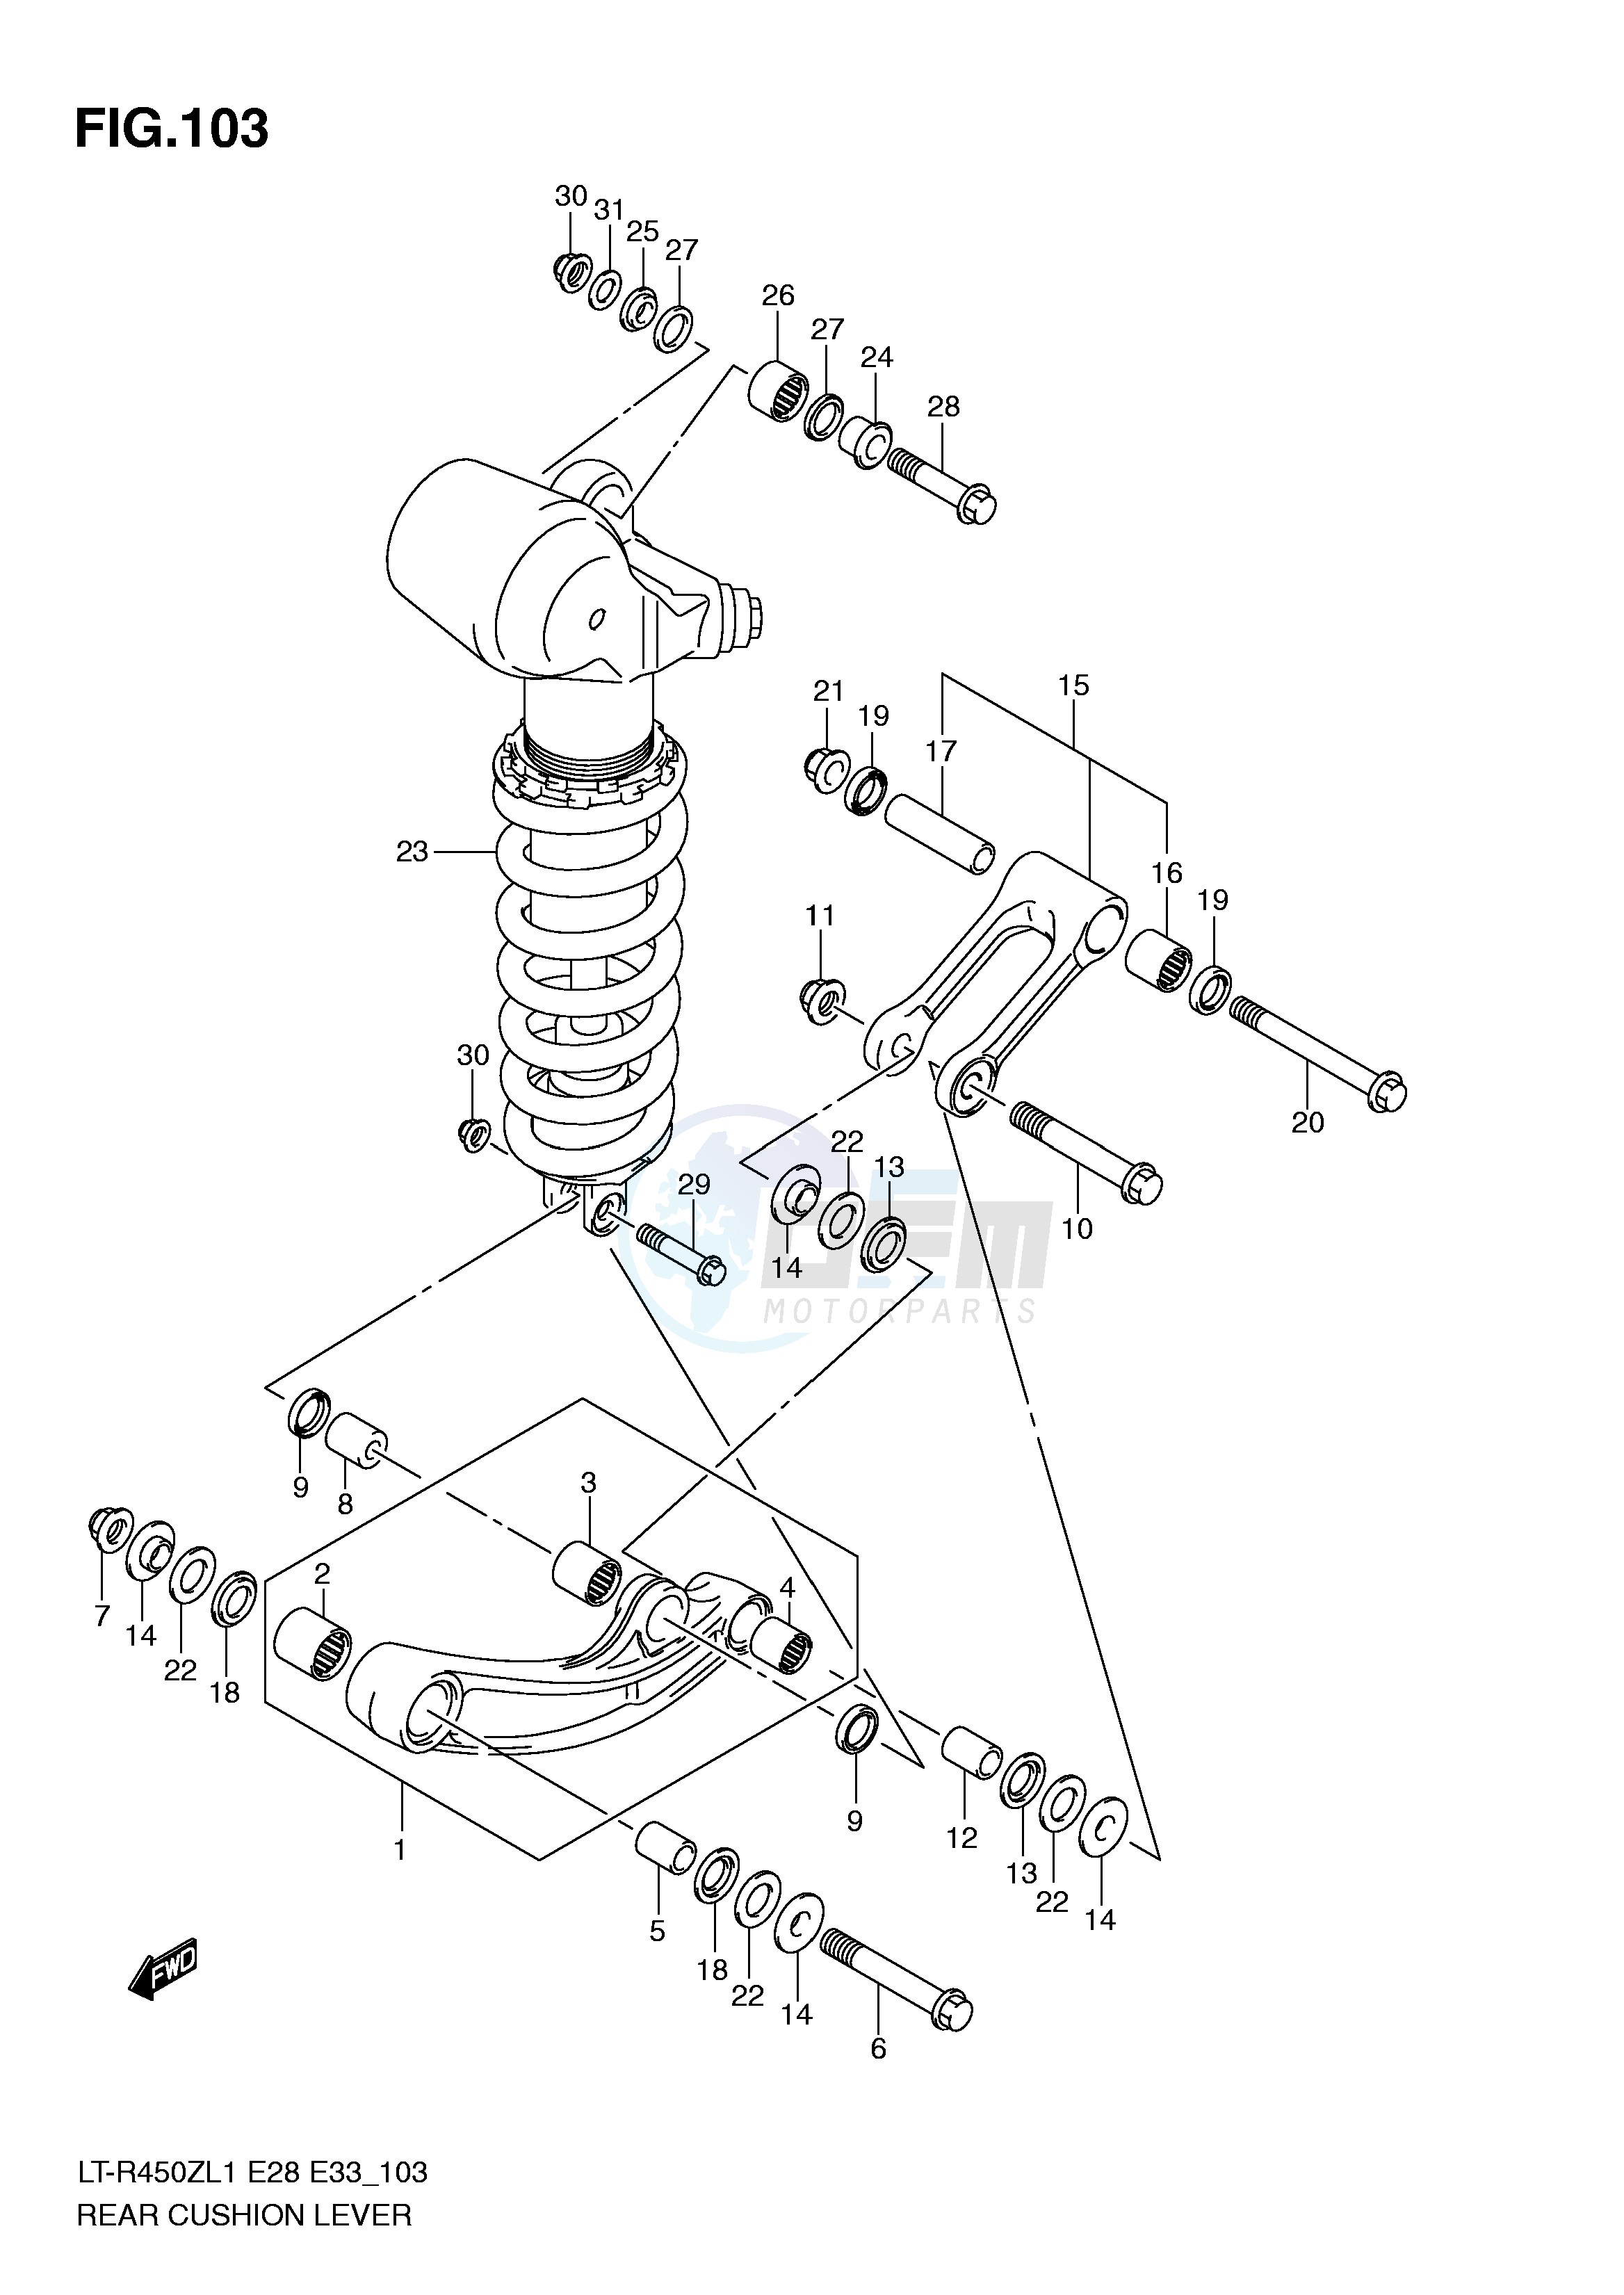 REAR CUSHION LEVER (LT-R450ZL1 E28) blueprint